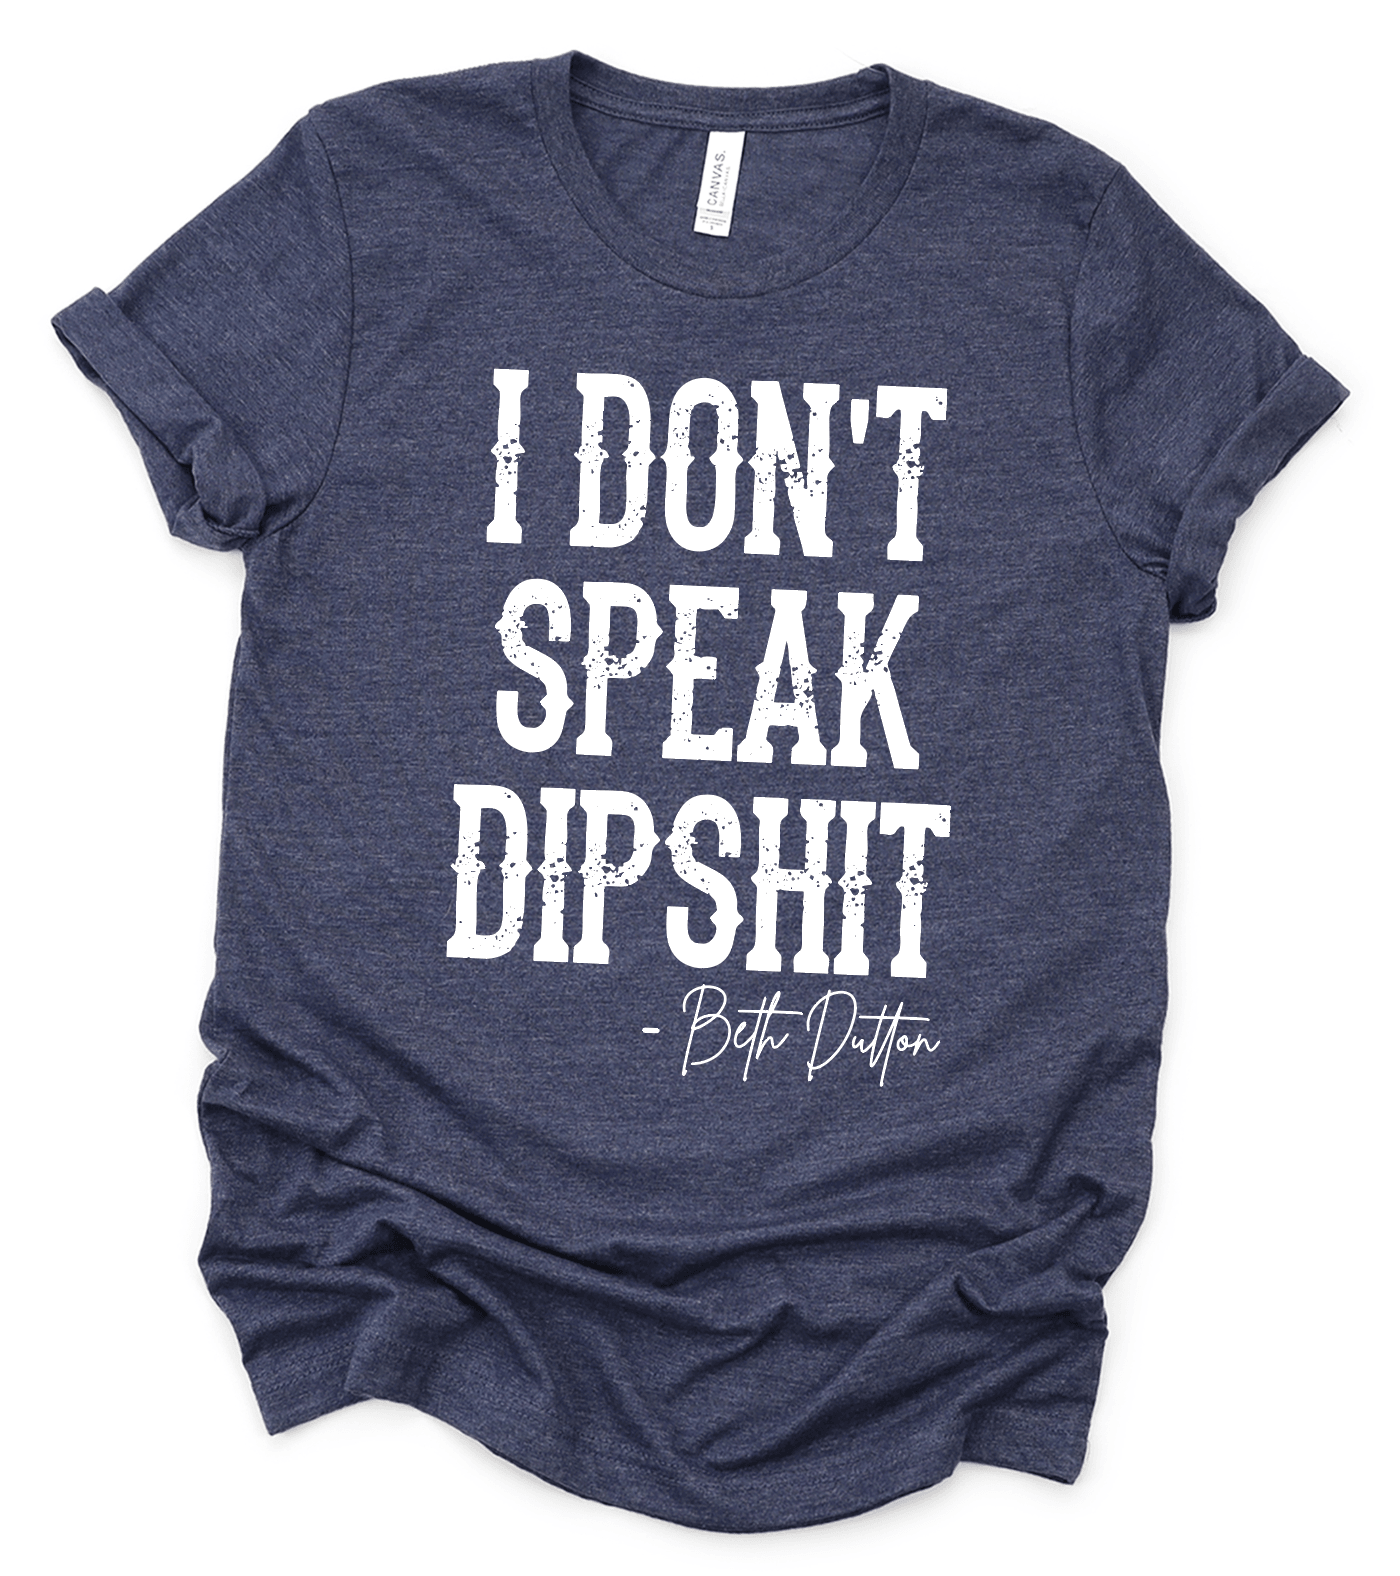 I don't speak dipshit-Beth Dutton - Signastyle Boutique